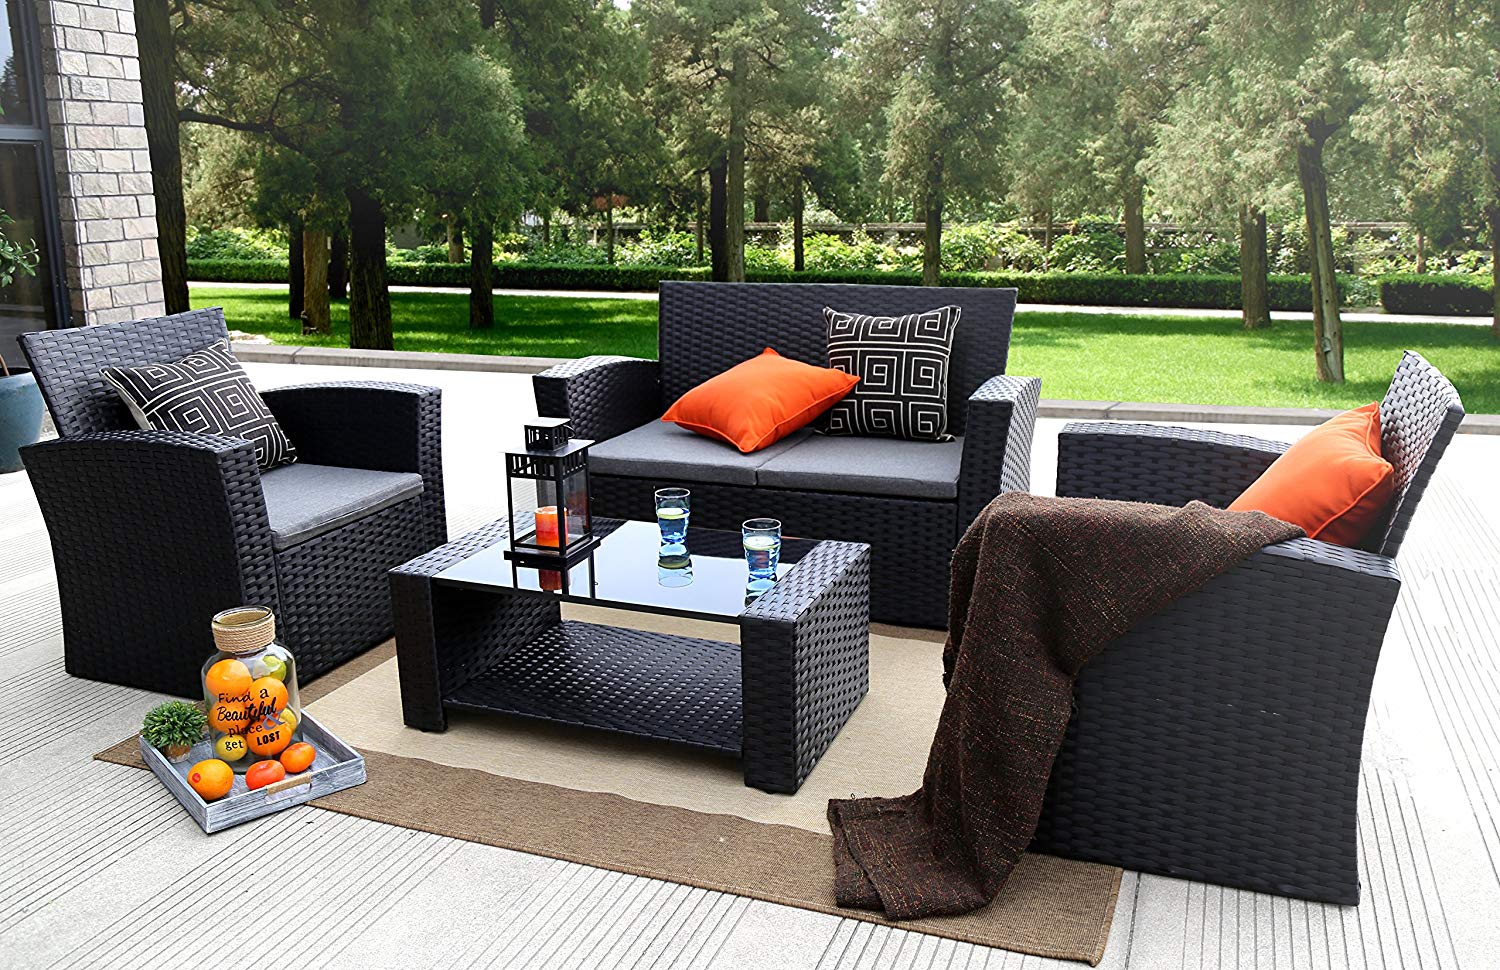 Terrace furniture amazon.com: baner garden (n87 4 pieces of garden furniture complete terrace cushions ZQYOKDD